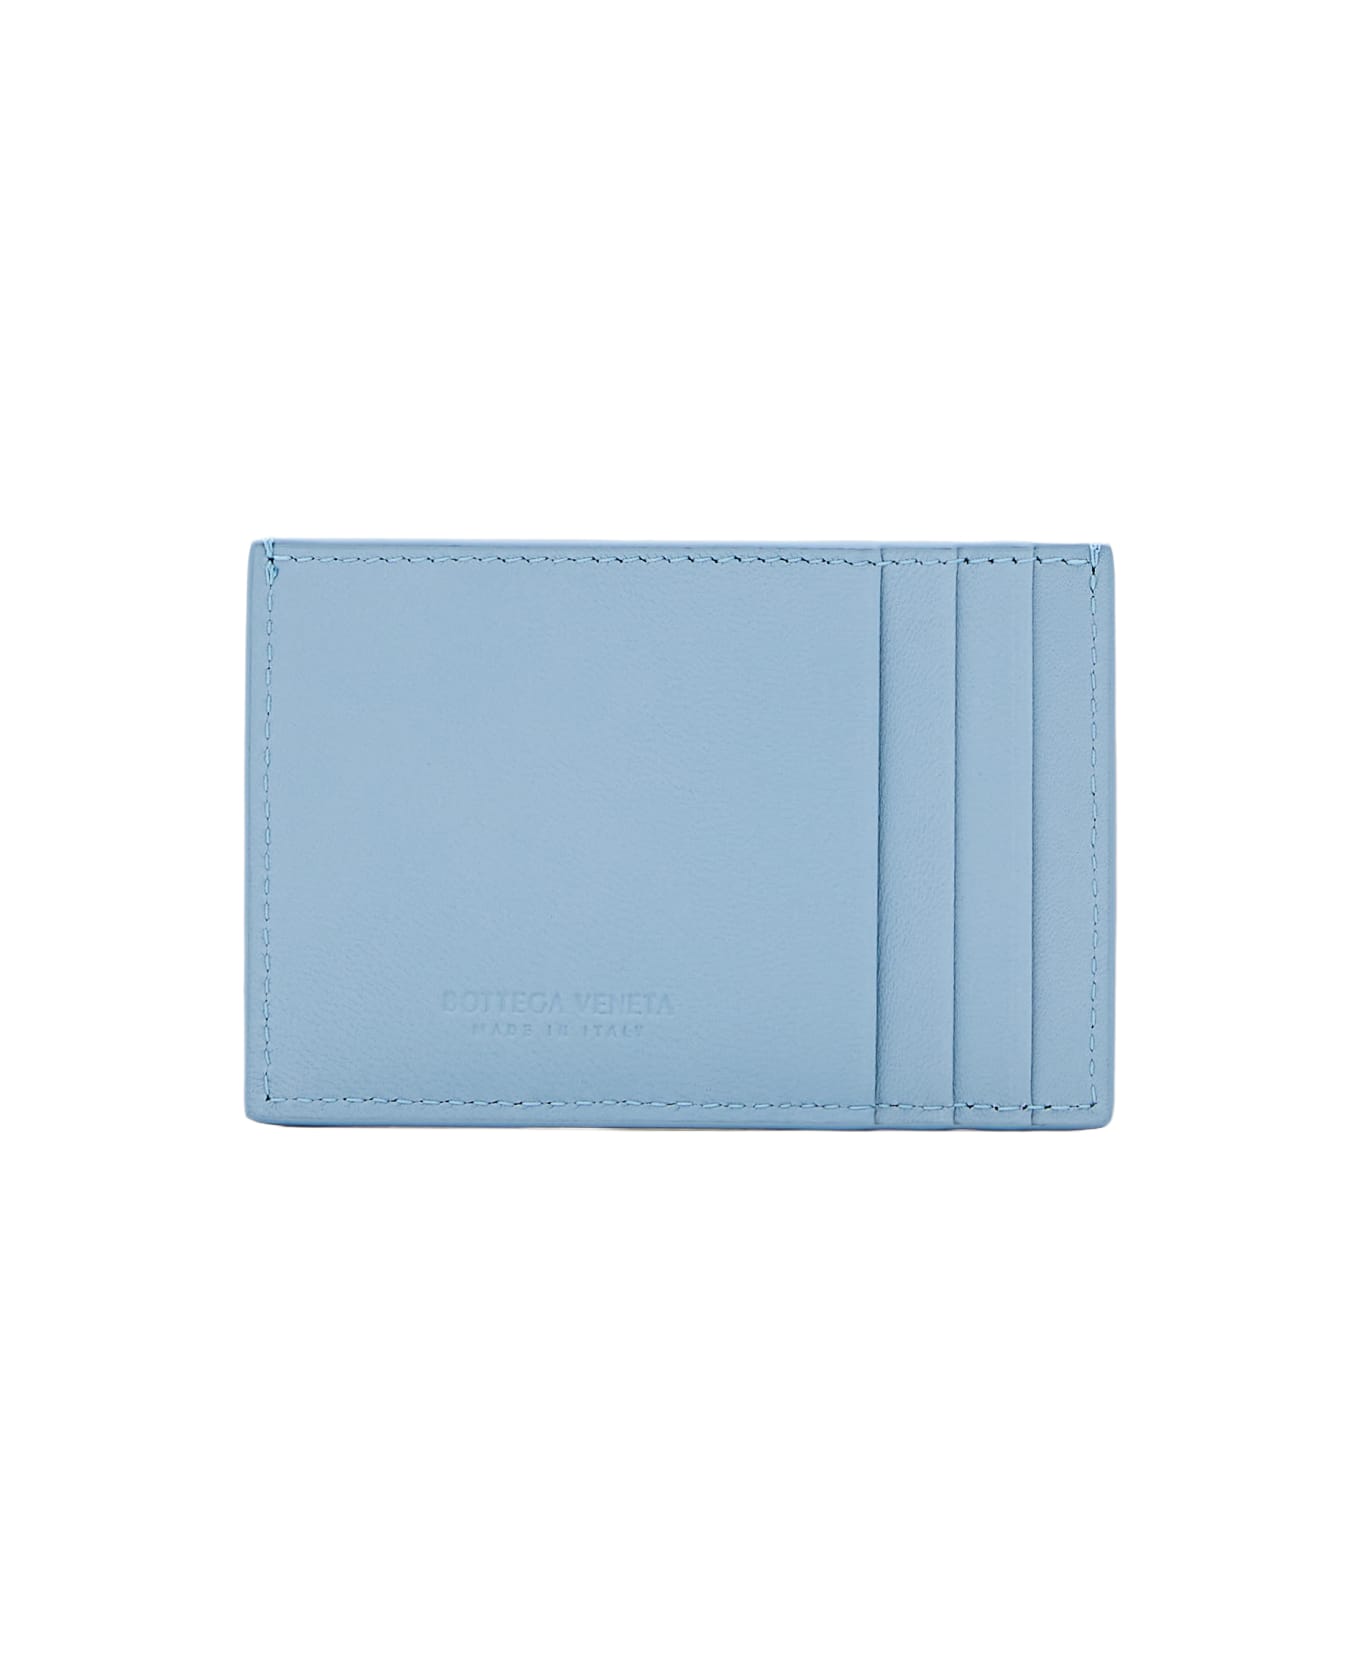 Bottega Veneta Intreccio Cardholder - Clear Blue 財布